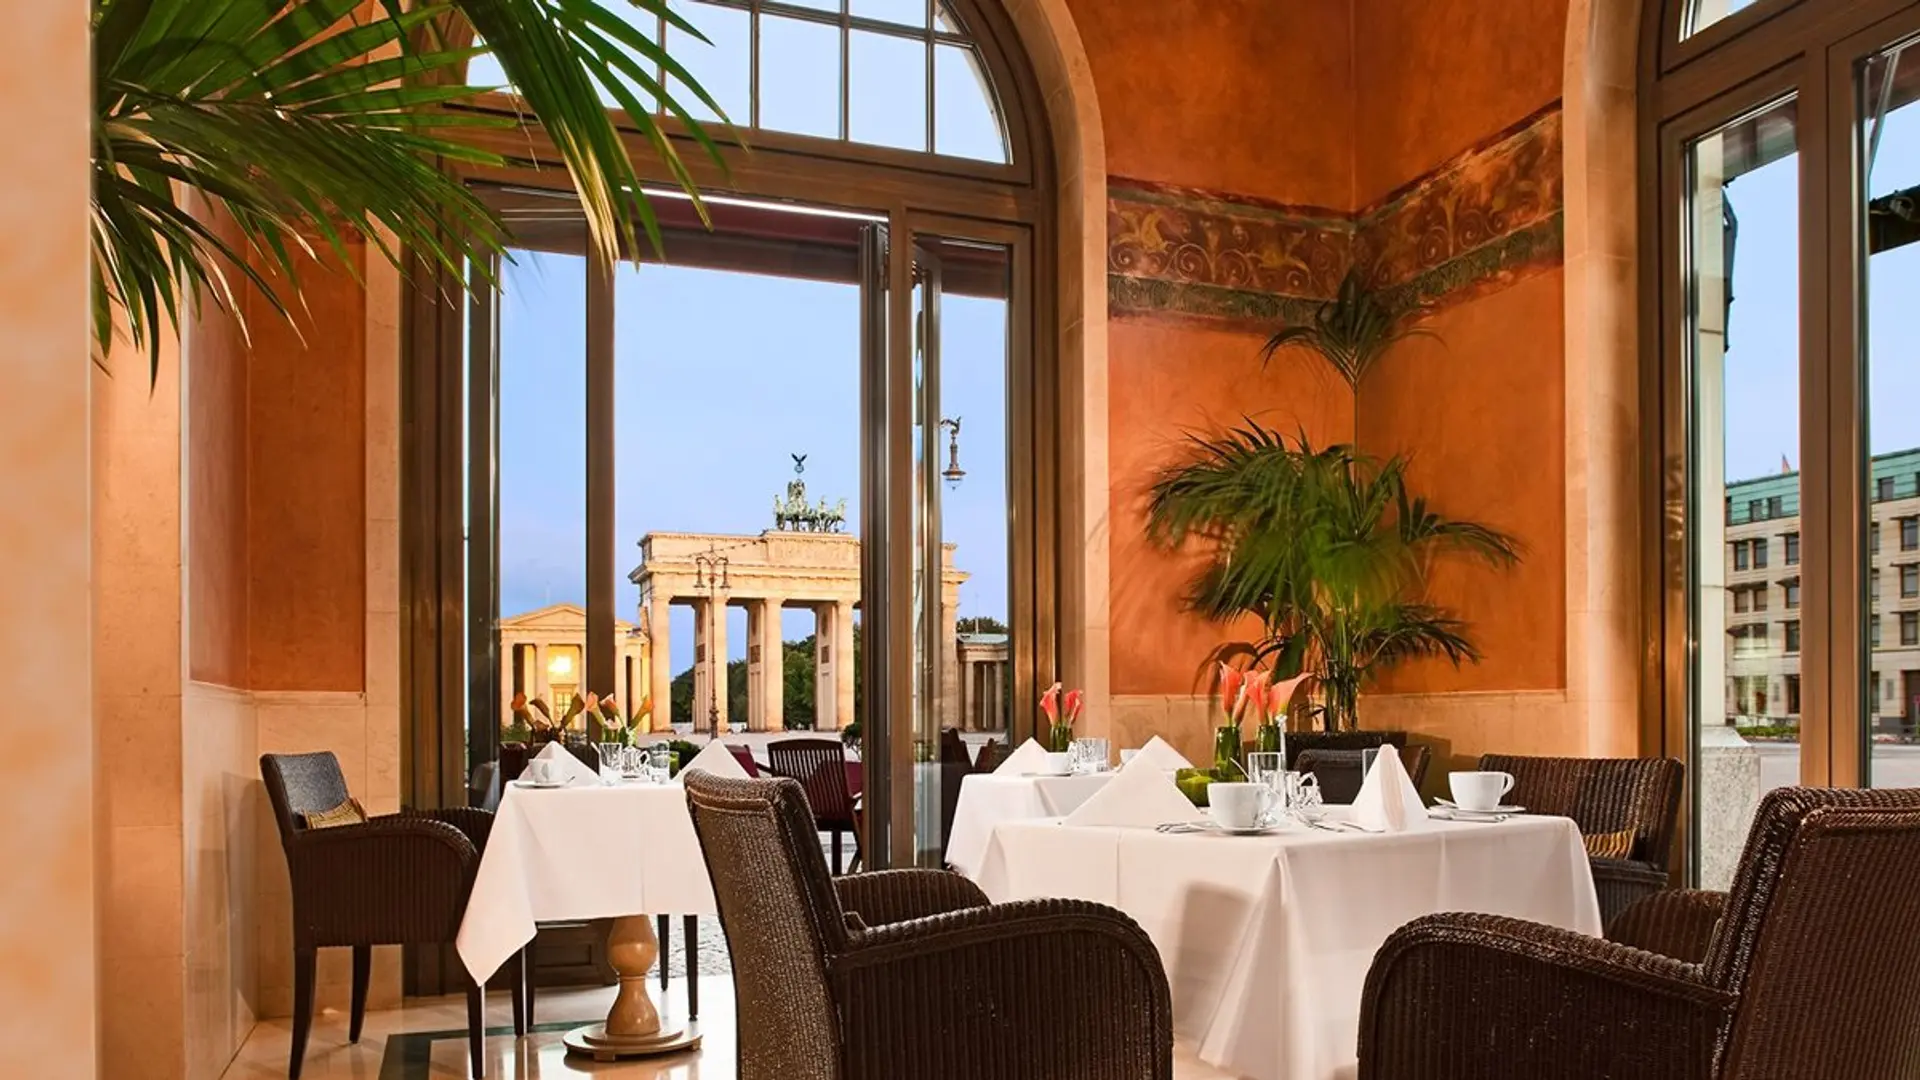 the dining area of The Hotel Adlon Kempinski Berlin